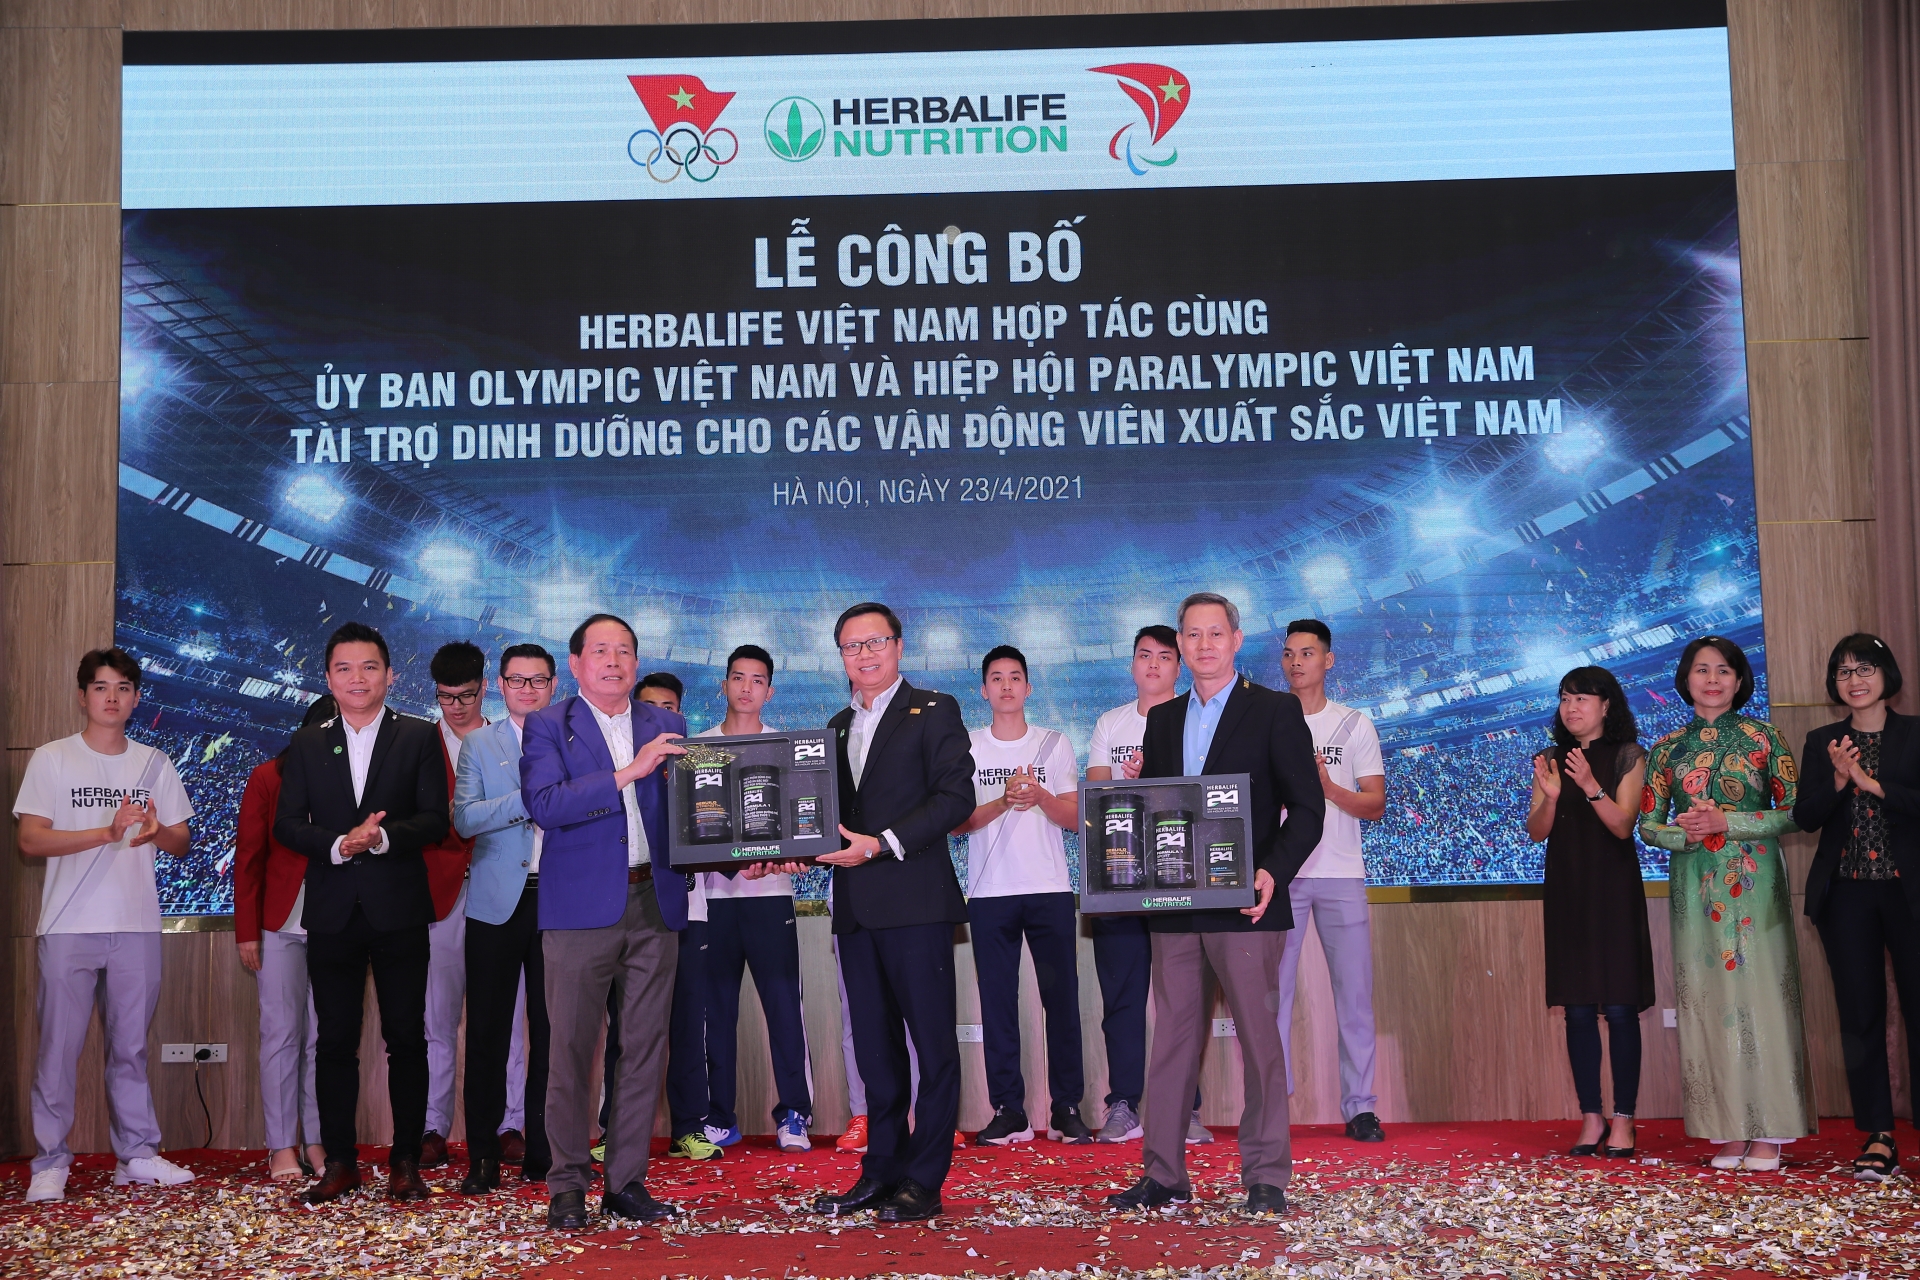 Herbalife Vietnam announces nutrition sponsorship for top Vietnamese athletes in 2021